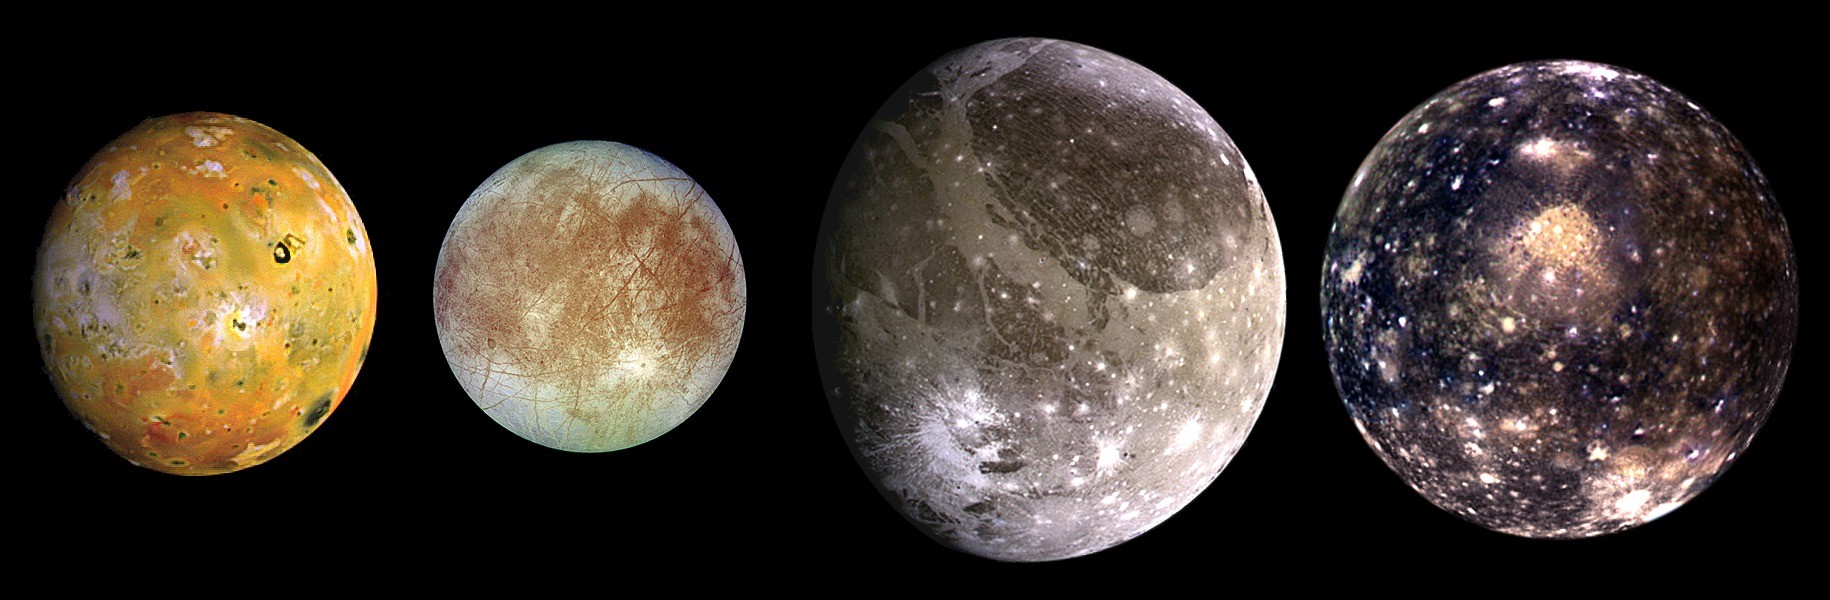 Luas de Júpiter descobertas por Galileu (Foto: Wikimedia/NASA/JPL/DLR)